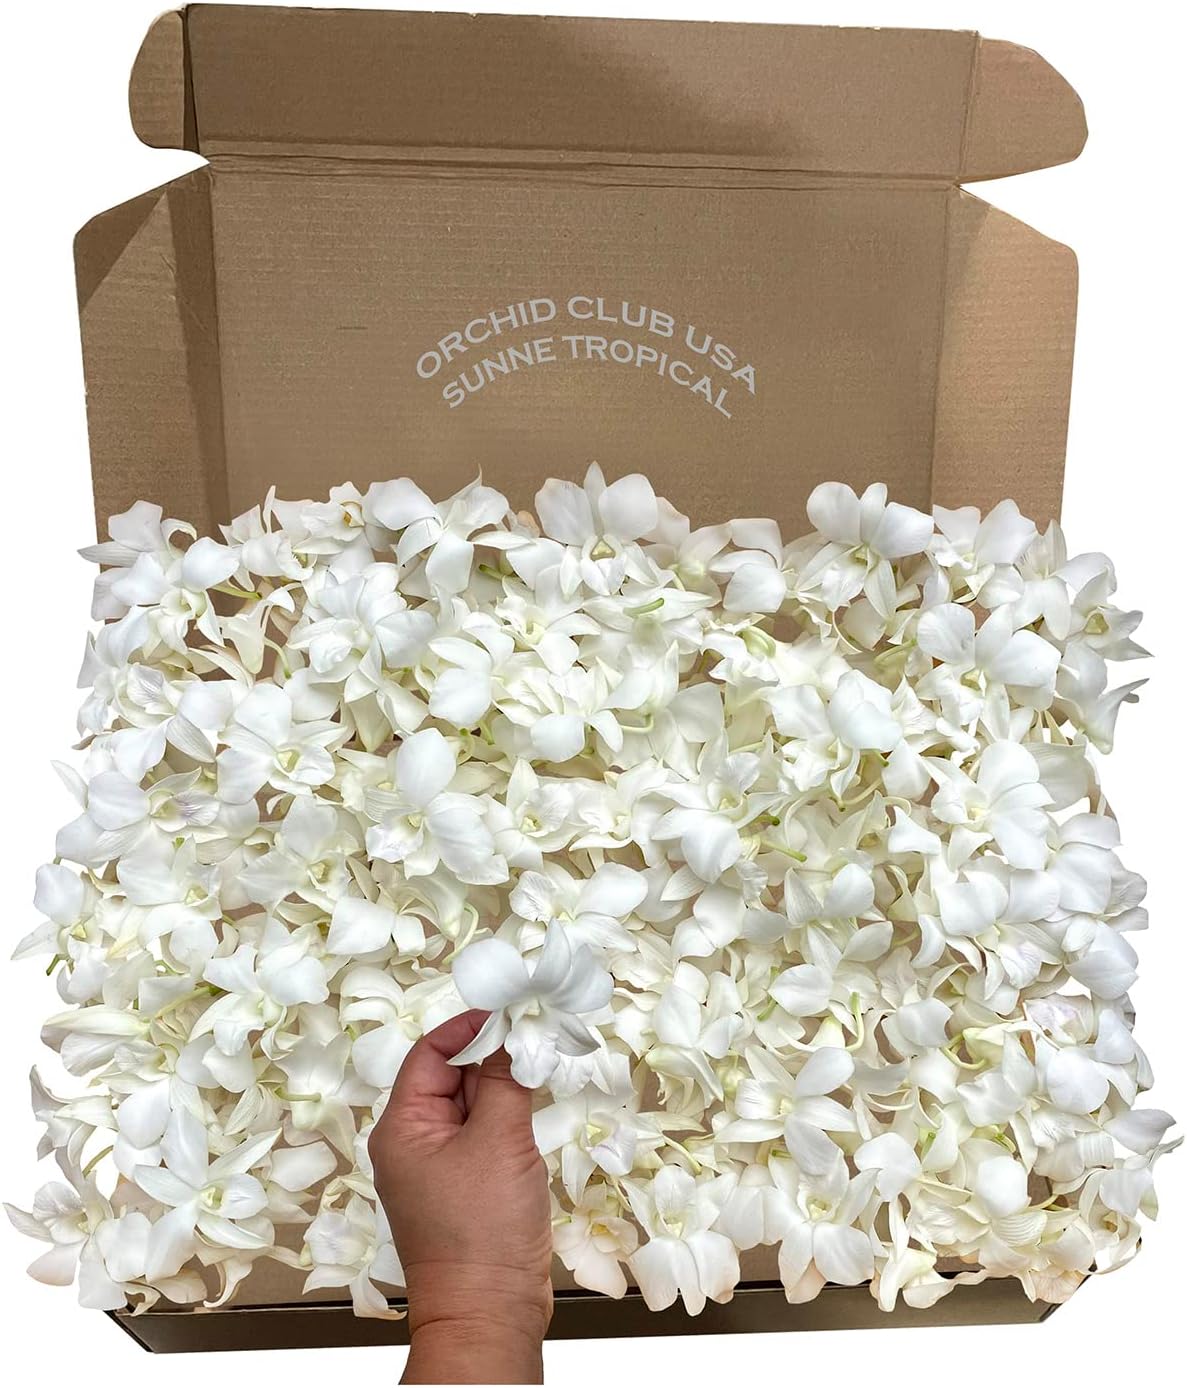 50 Natural White Orchid Loose Bloom Fresh Cut Flowers Bundle Build A Box